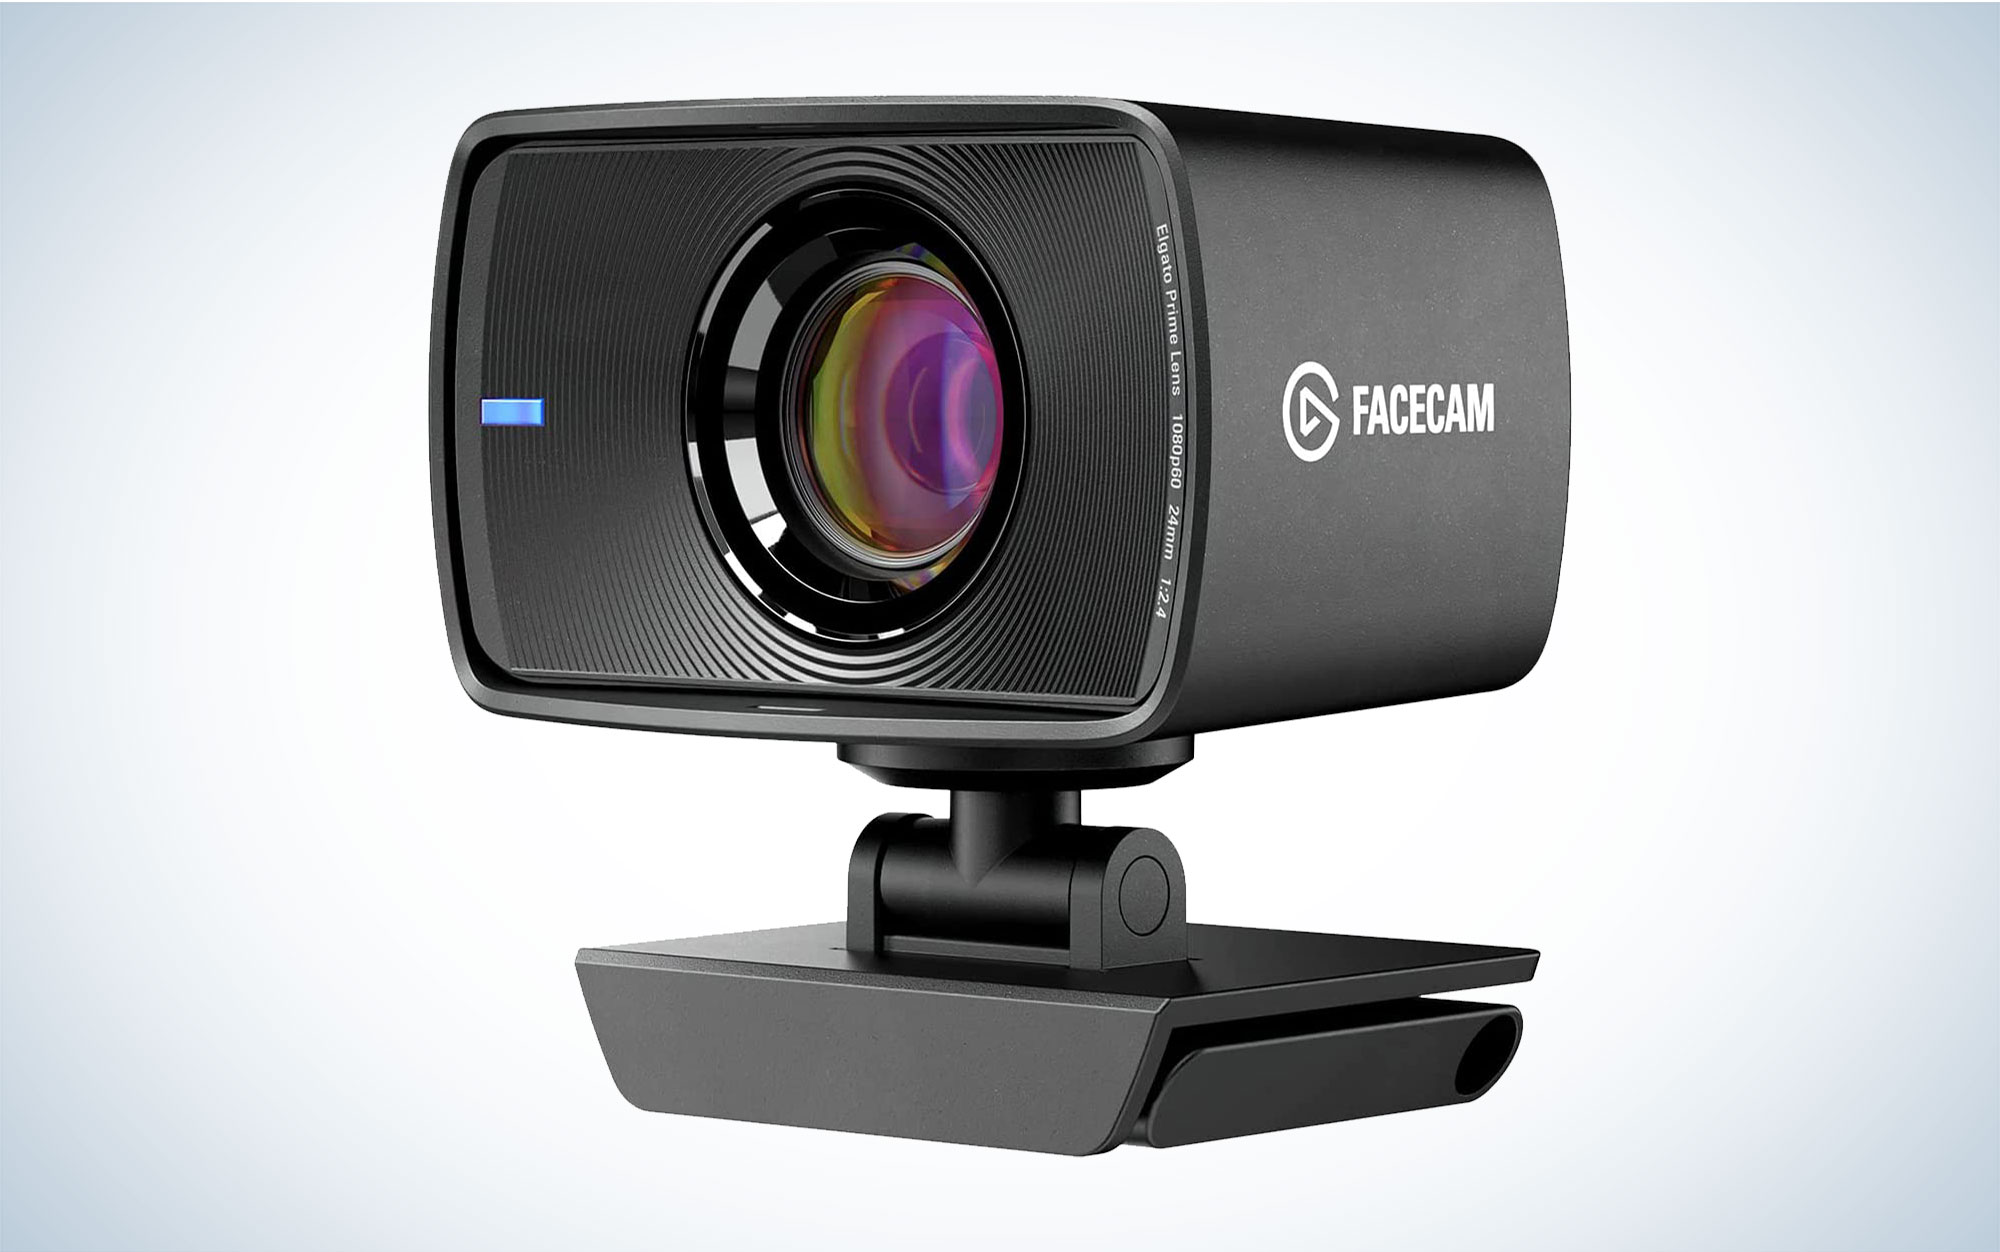 Elgato Facecam Review - The Webcam for Content Creators